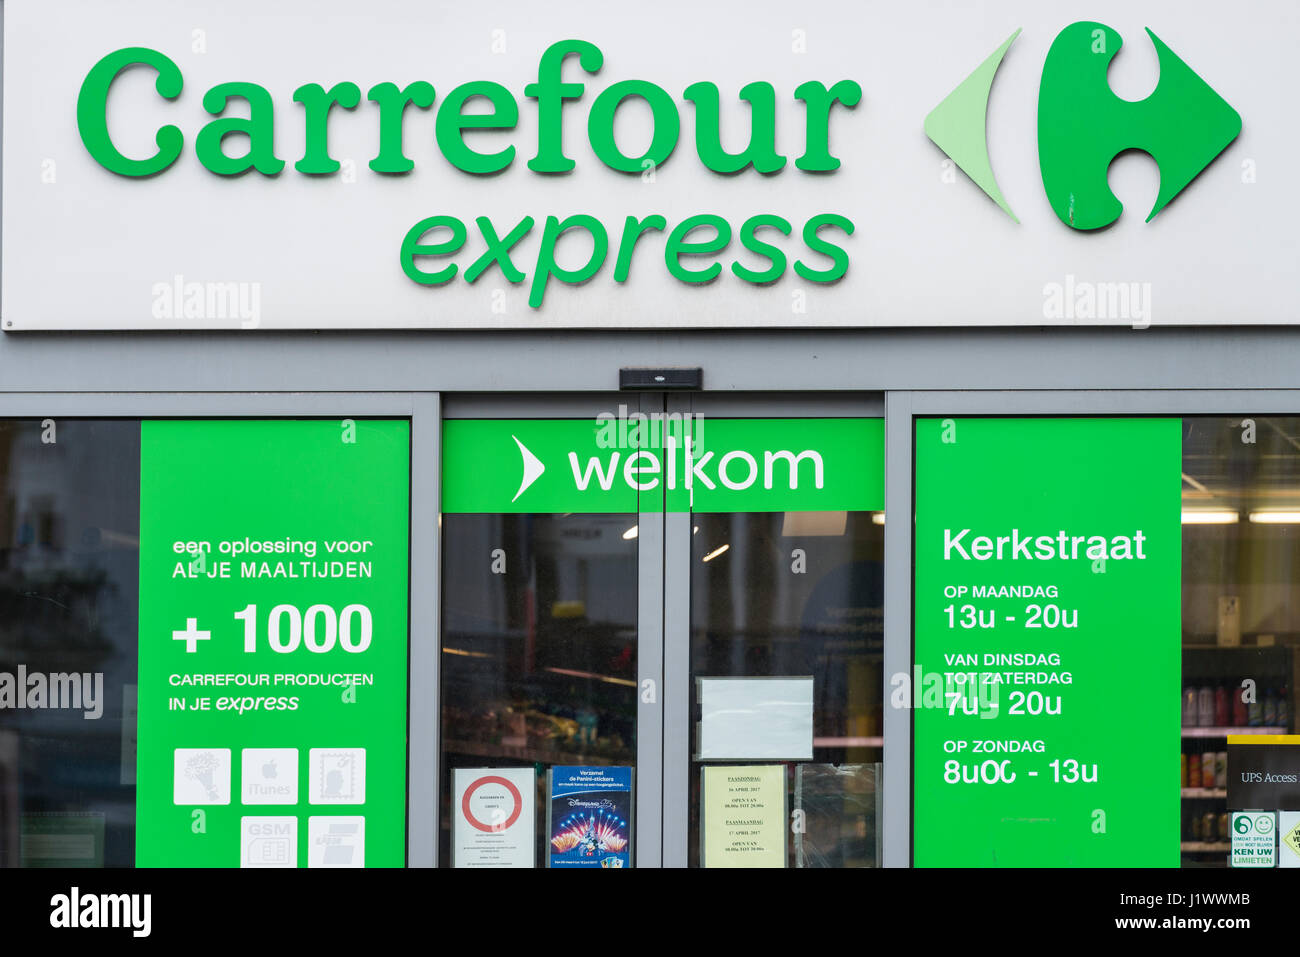 Entrance of Carrefour express shop in Kerkstraat Antwerp Stock Photo